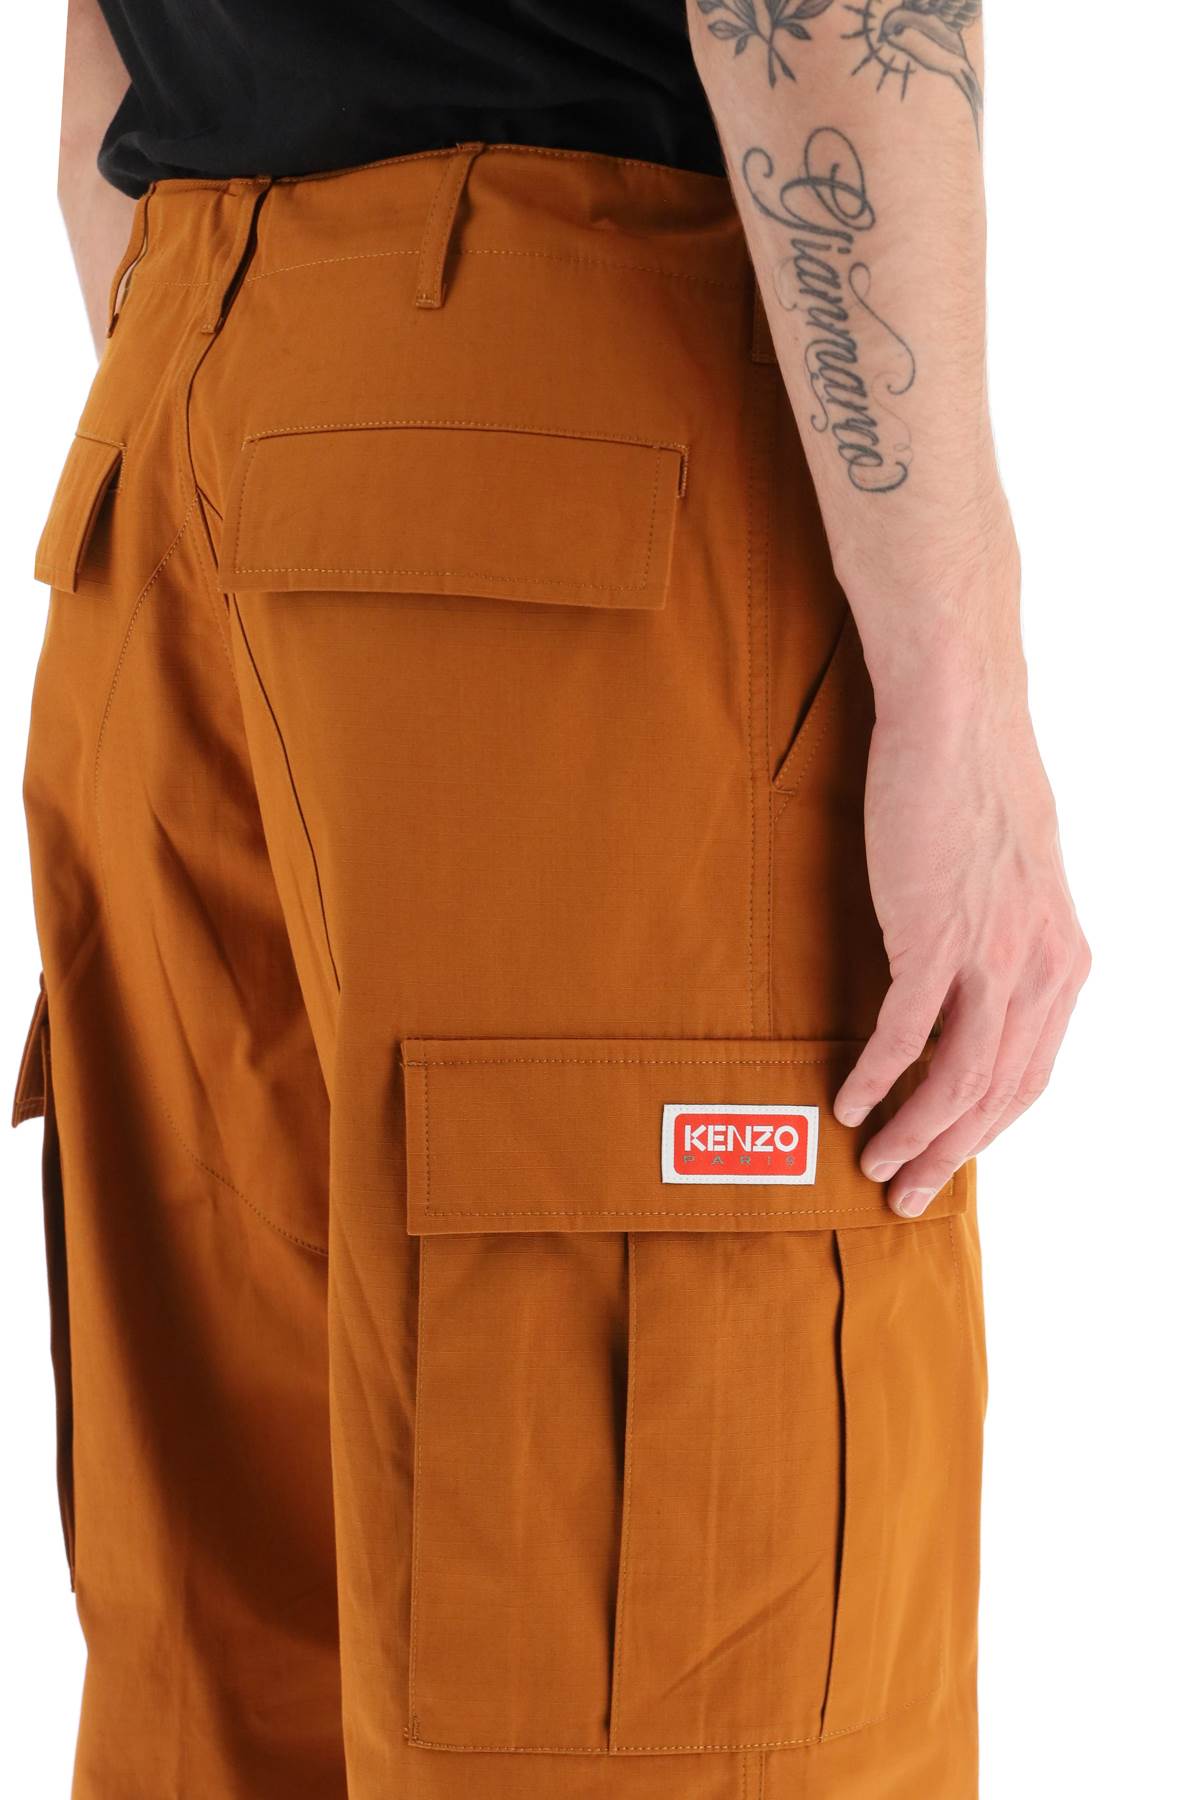 Kenzo cargo pants featuring 'boke flower' button-3